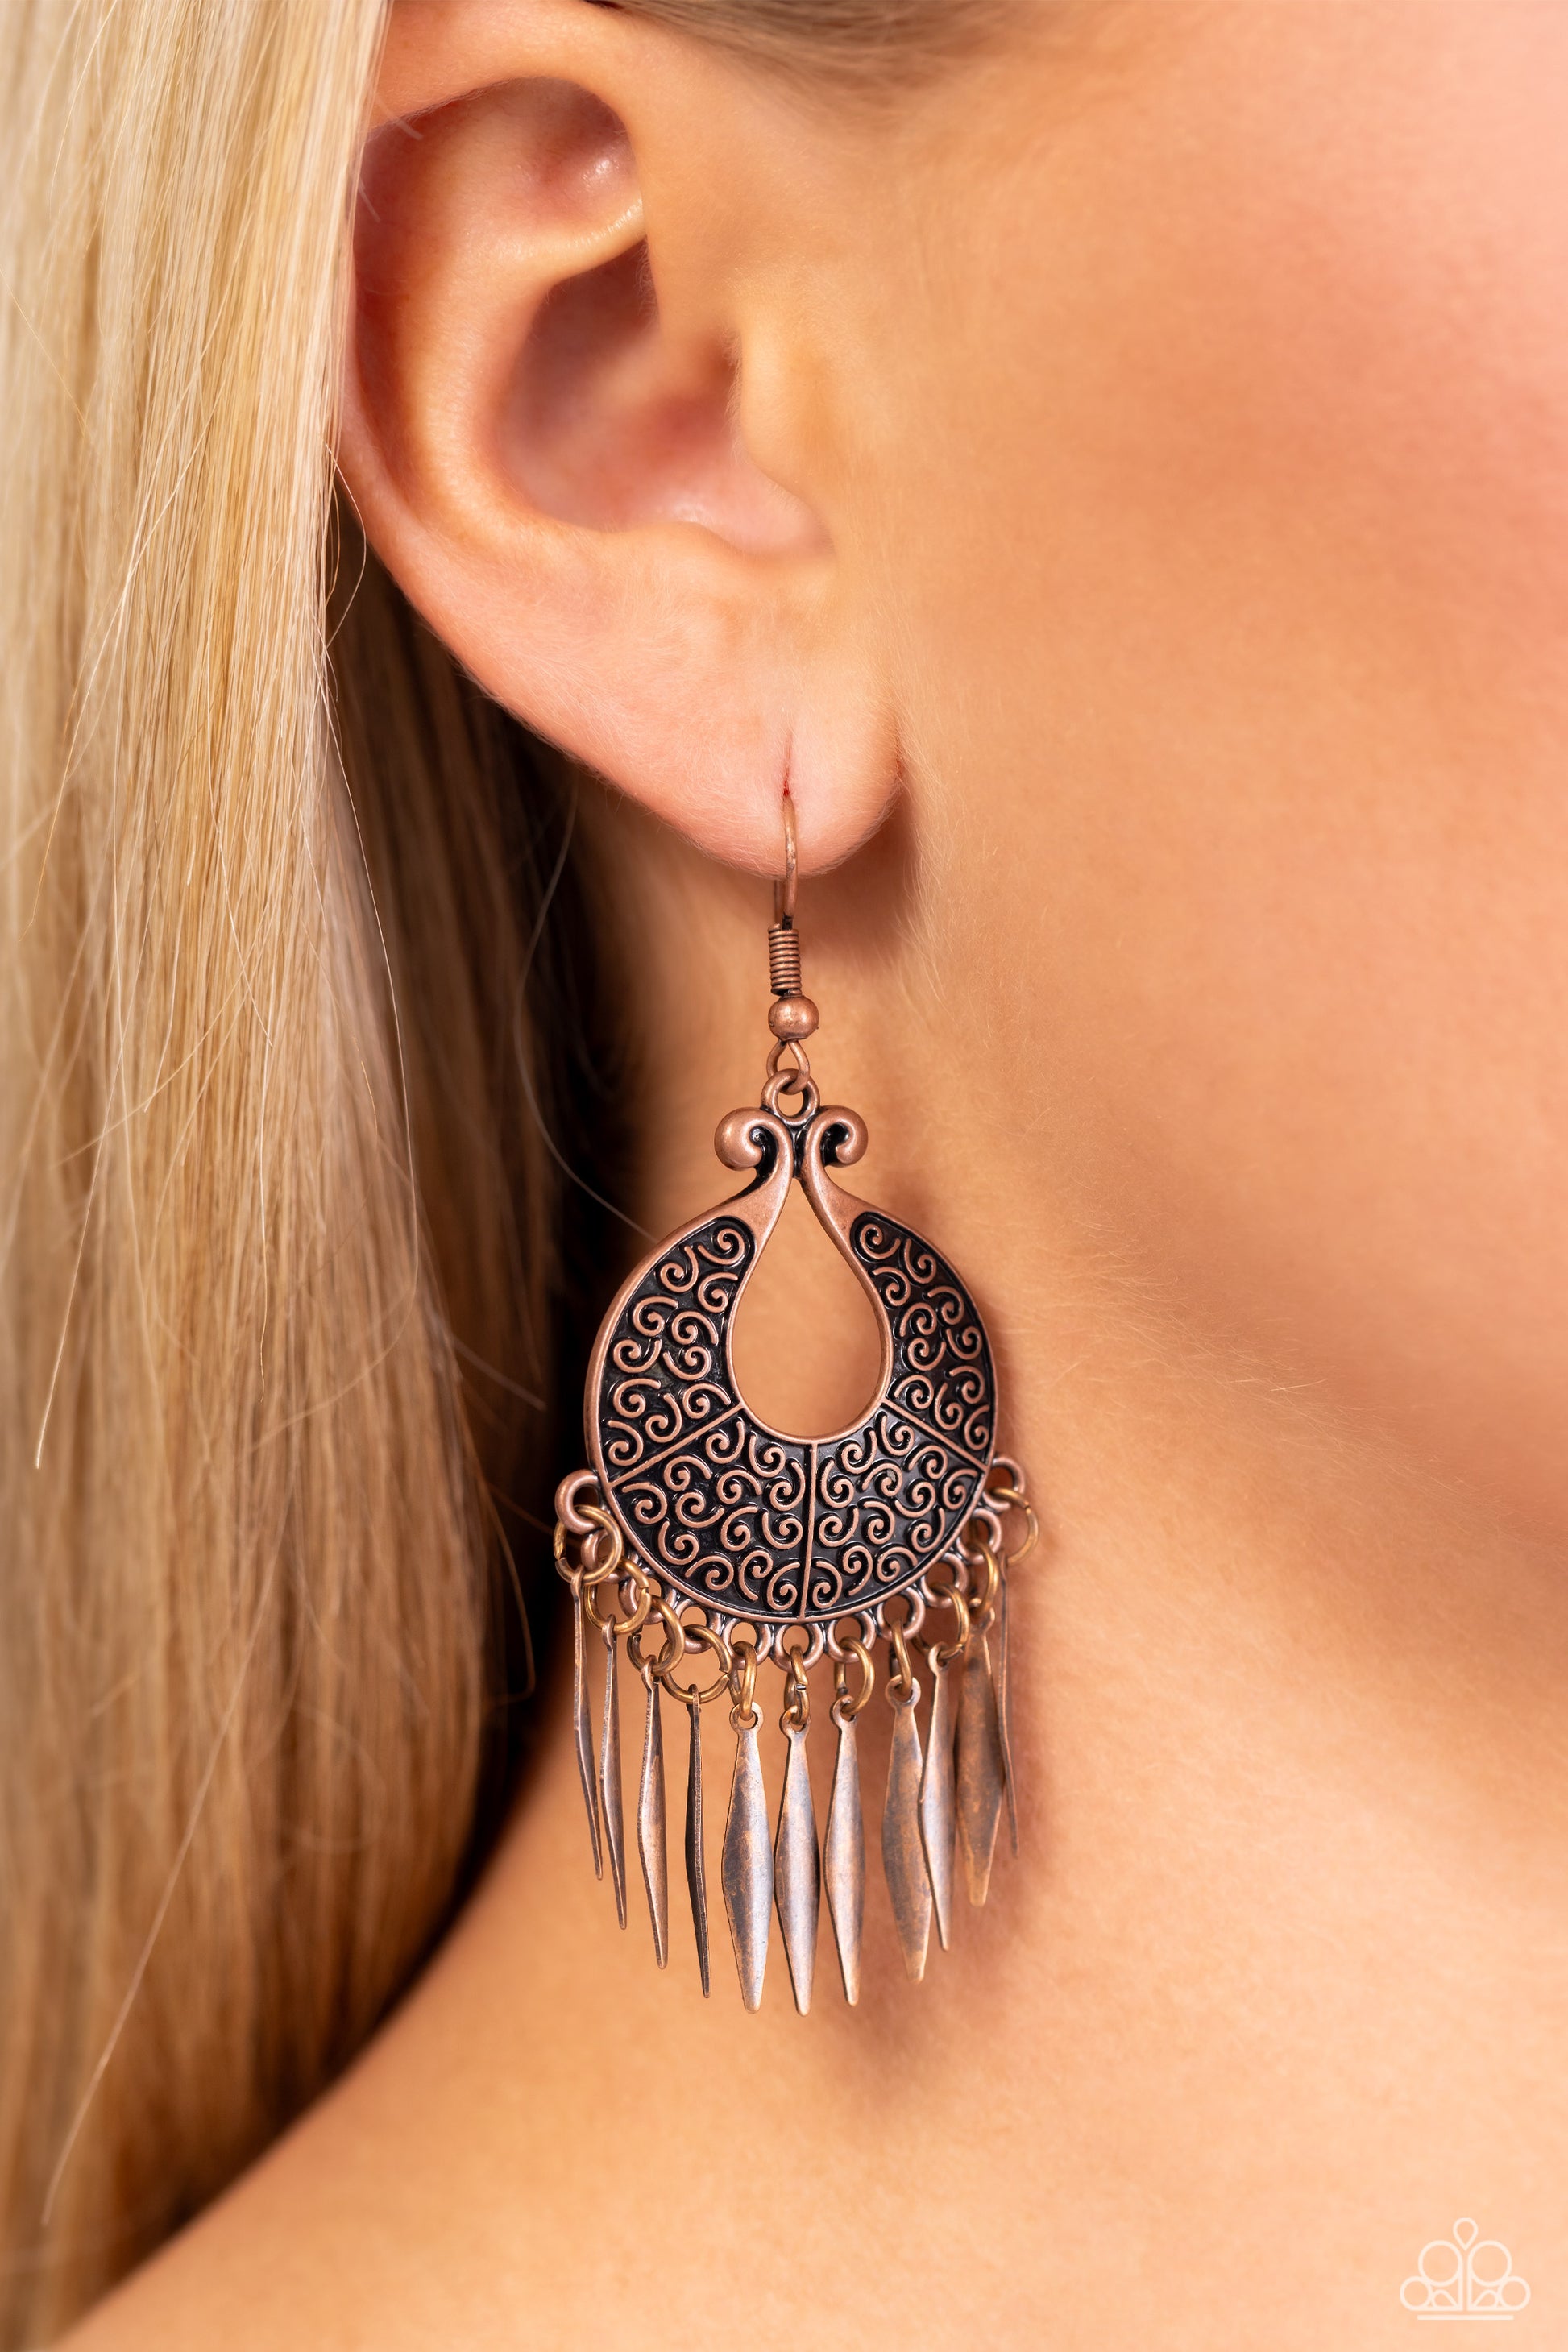 Boho Unique Ear Cuff Clip-On Silver Earring Tribal Fashion Jewelry